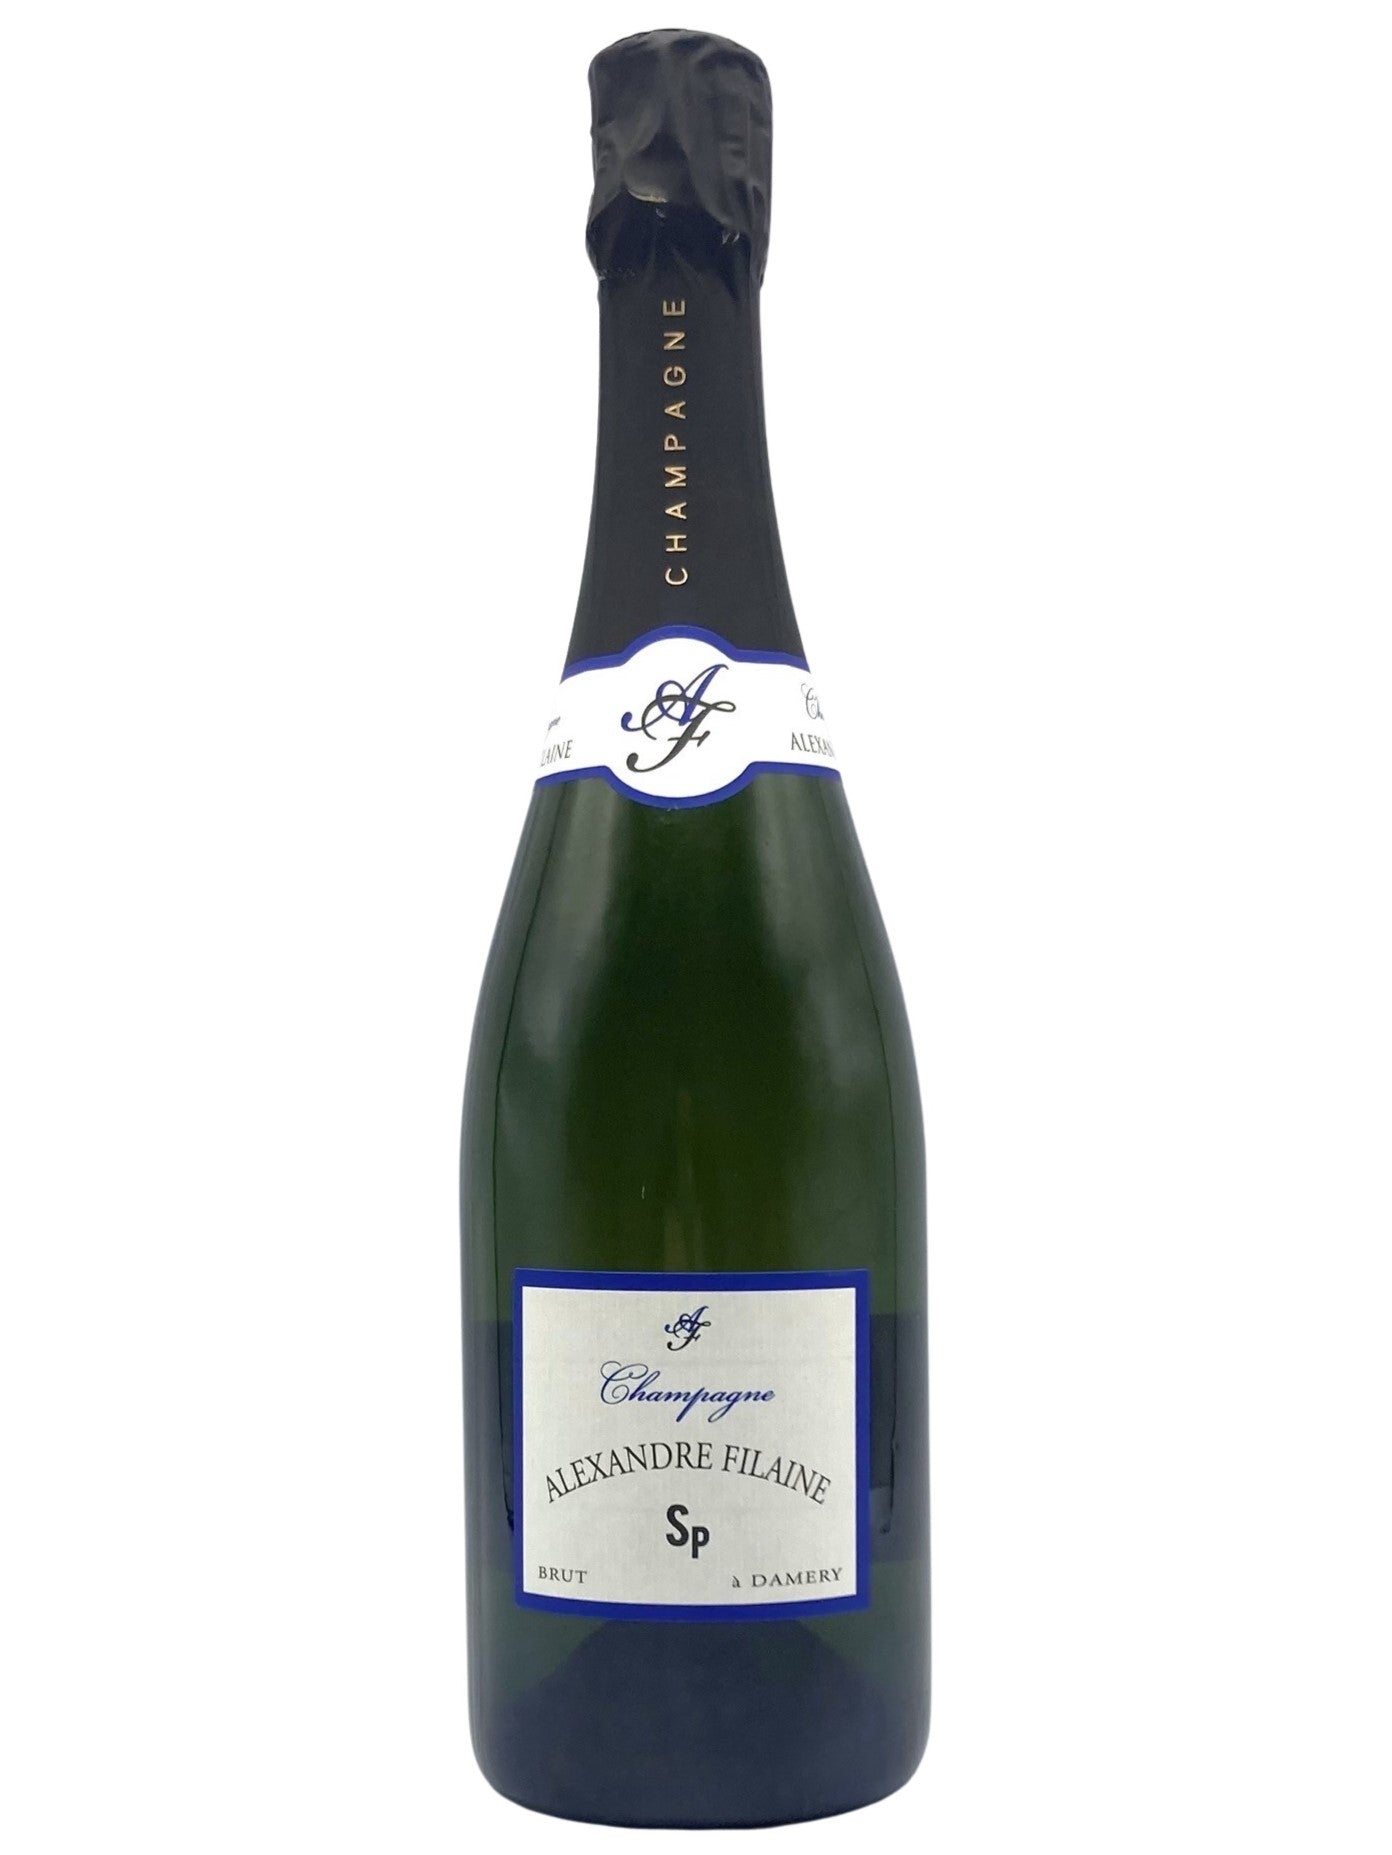 Alexandre Filaine 'Cuvee Speciale' Brut Champagne NV